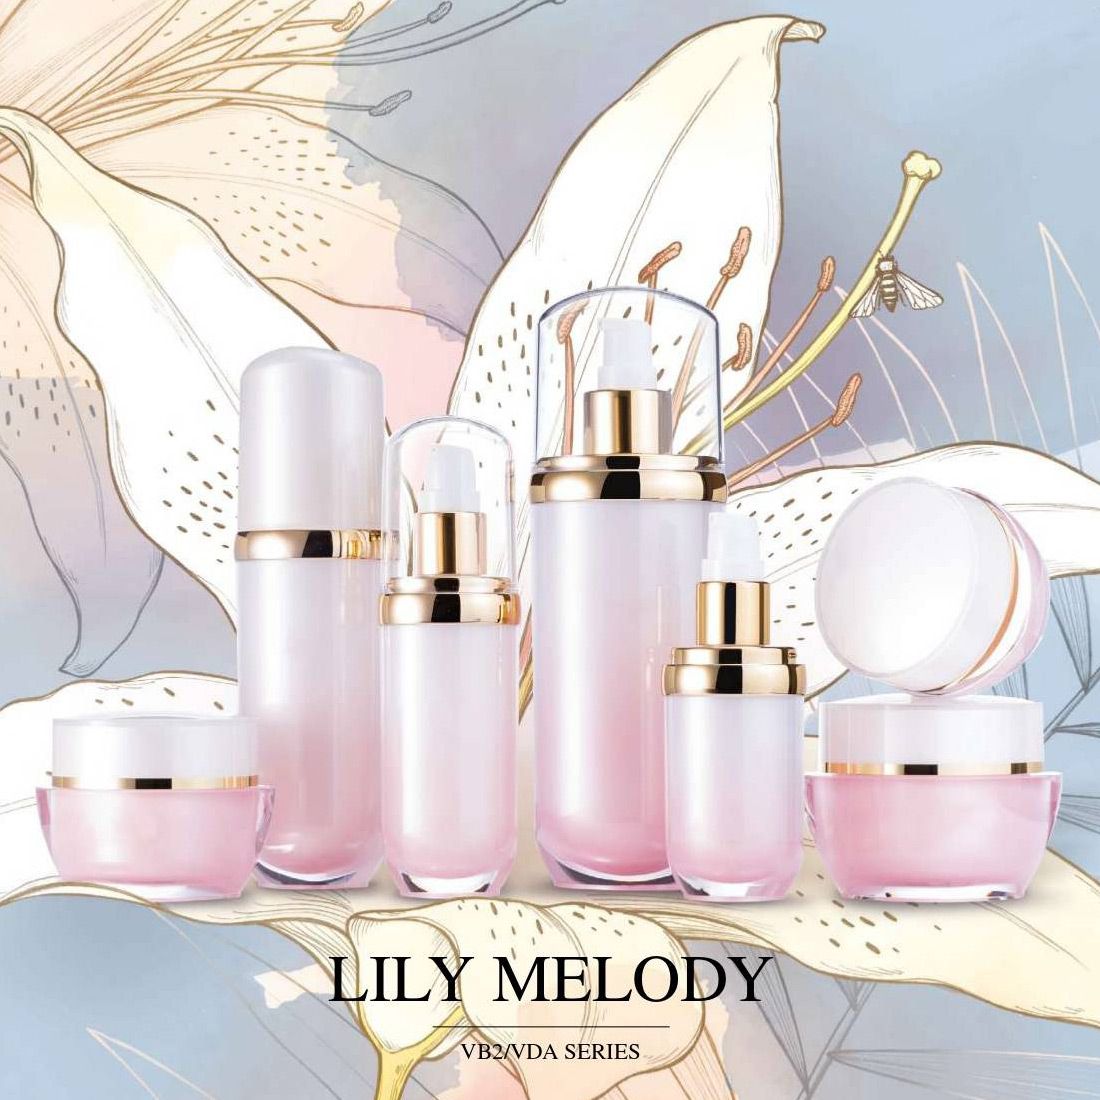 Lily Melody (Luxus-Kosmetik- und Hautpflegeverpackung aus Acryl) VB2 / VDA-D-Serie